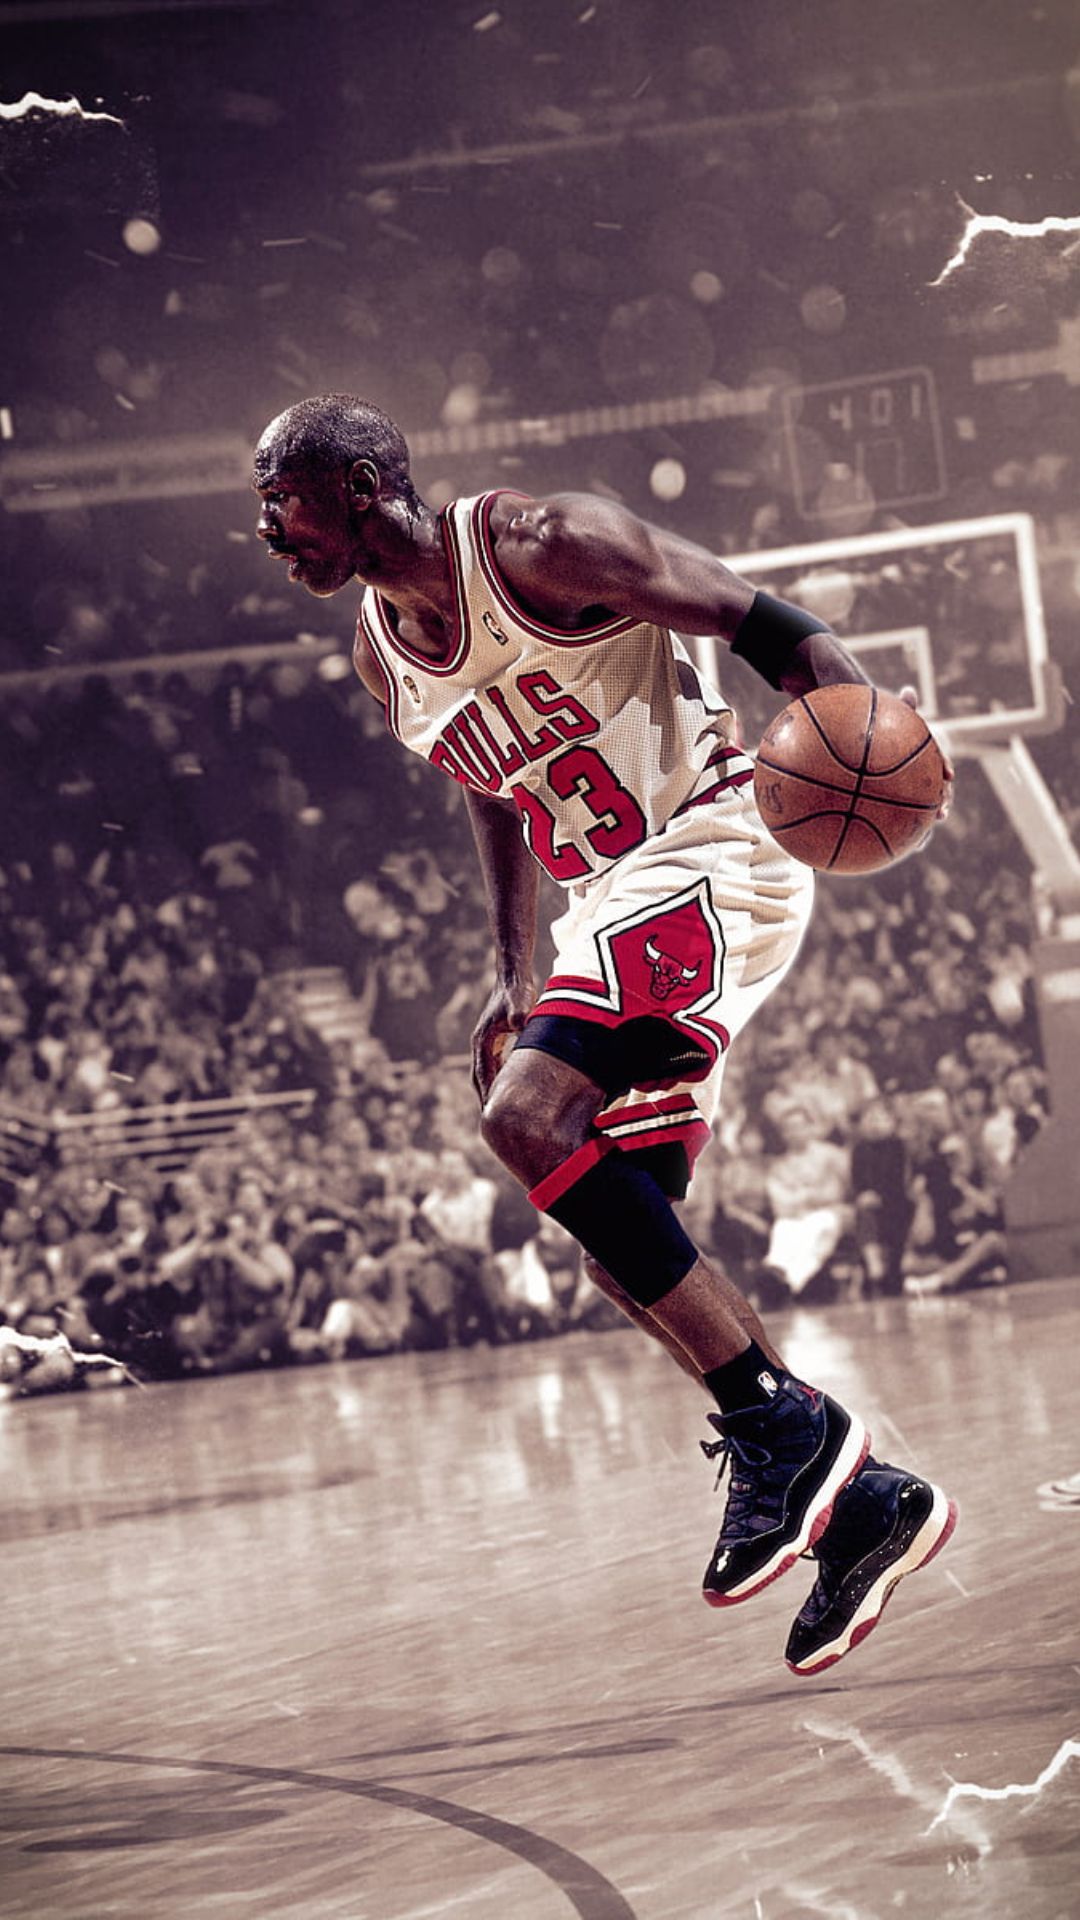 Top 25 Best Michael Jordan iPhone Wallpapers [ 4k & HD Quality ]